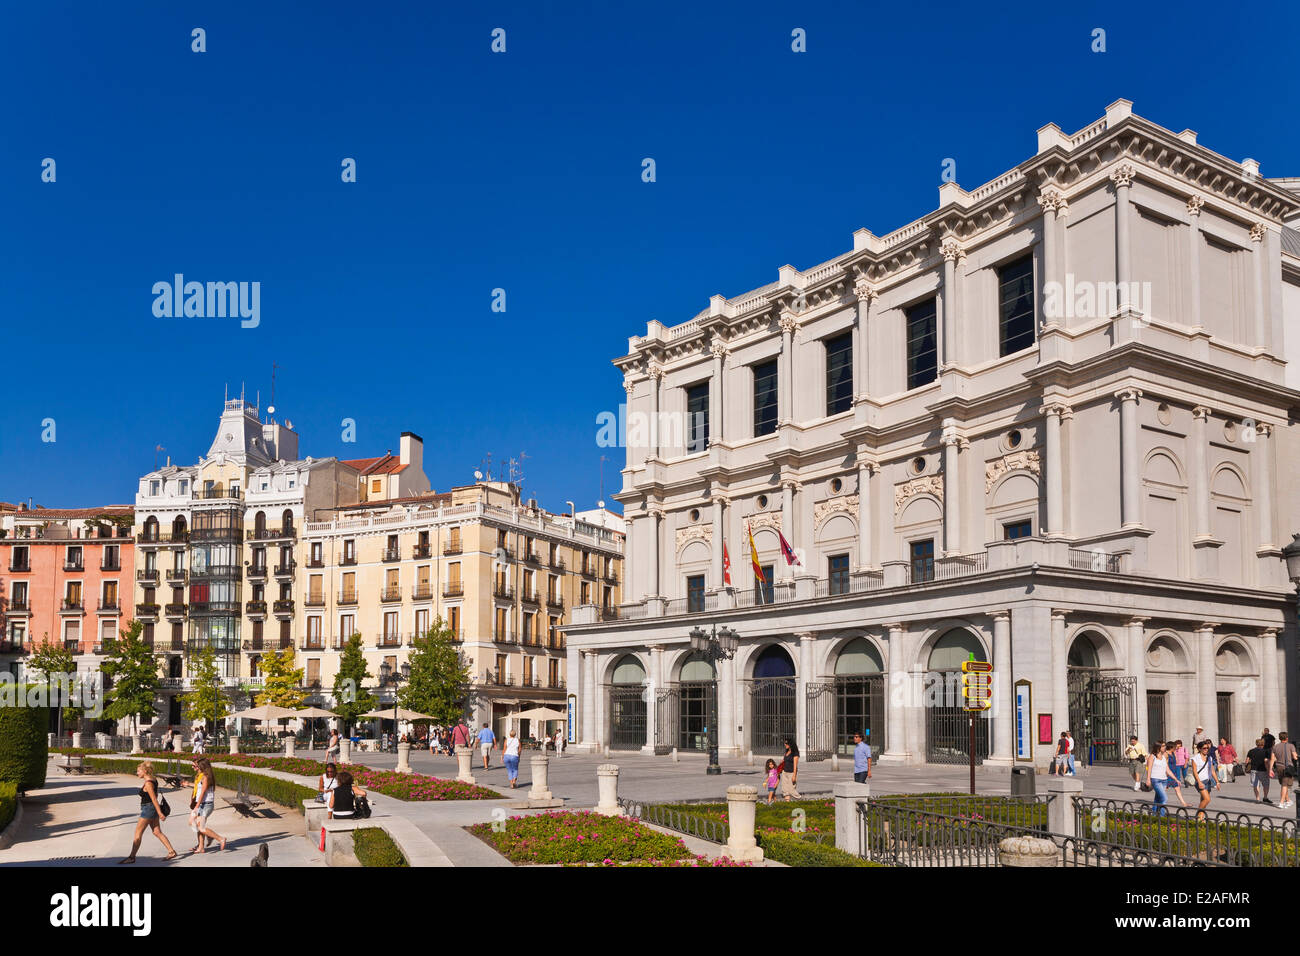 Spain, Madrid, Plaza de Oriente, Royal Theatre of the architect Antonio Lopez Aguado and opened in 1850 Stock Photo